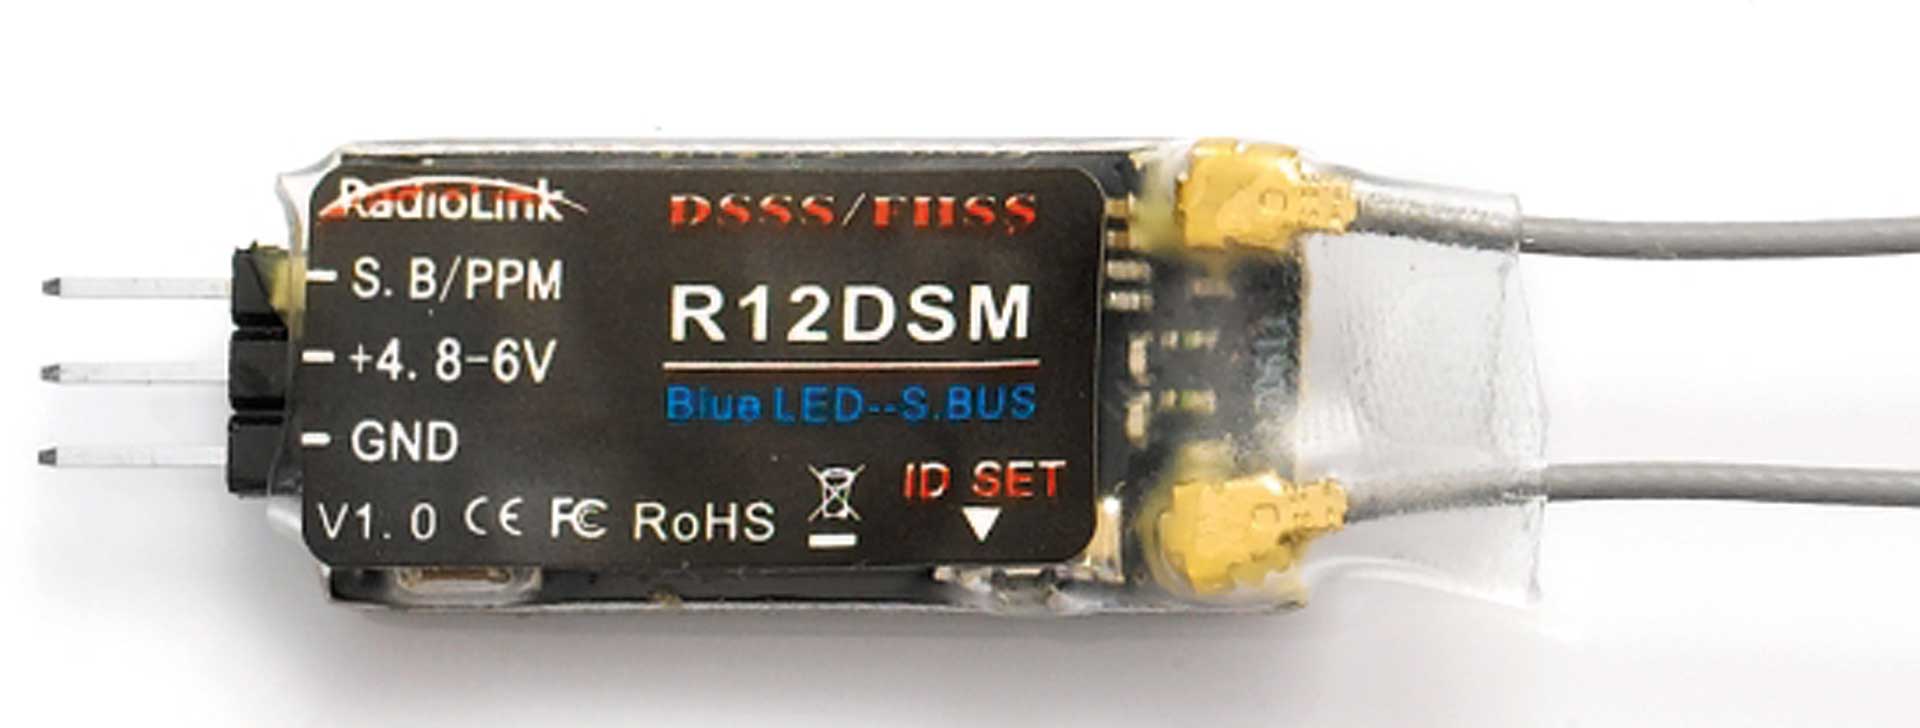 RadioLink Récepteur R12DSM Mini 12 voies FHSS/DSSS